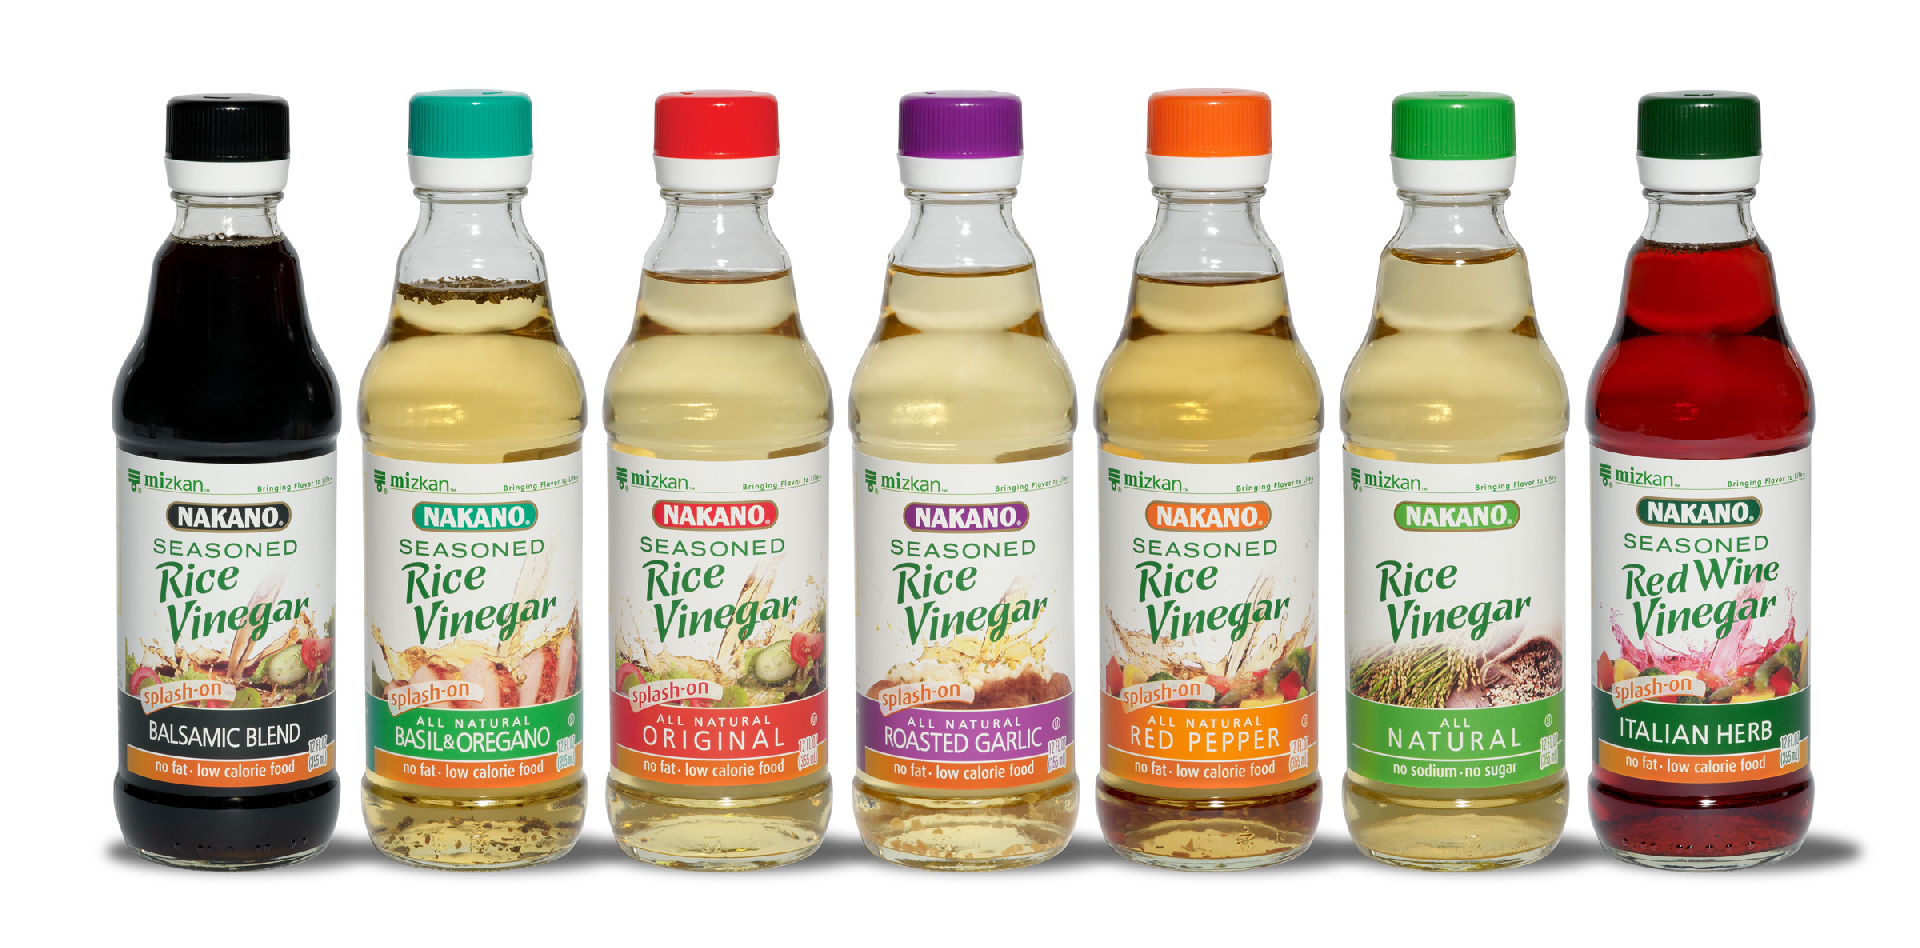 Rice Wine Vinegar Substitute: Rice Wine Vinegars from nakano group